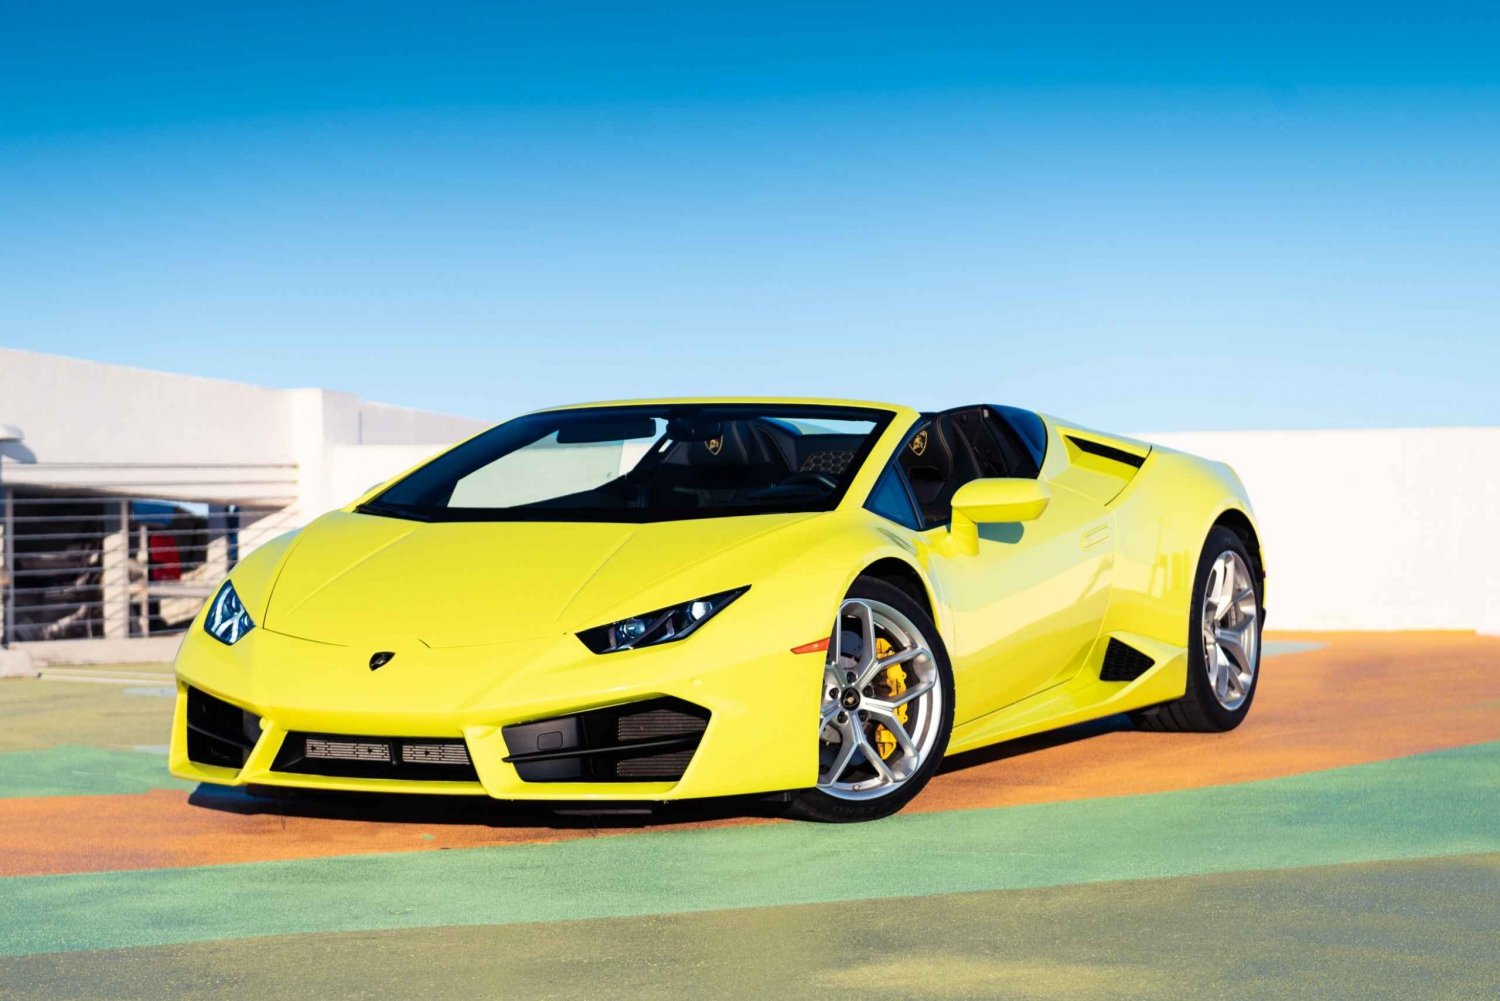 Miami: Lamborghini Huracan Spyder Supercar Tour